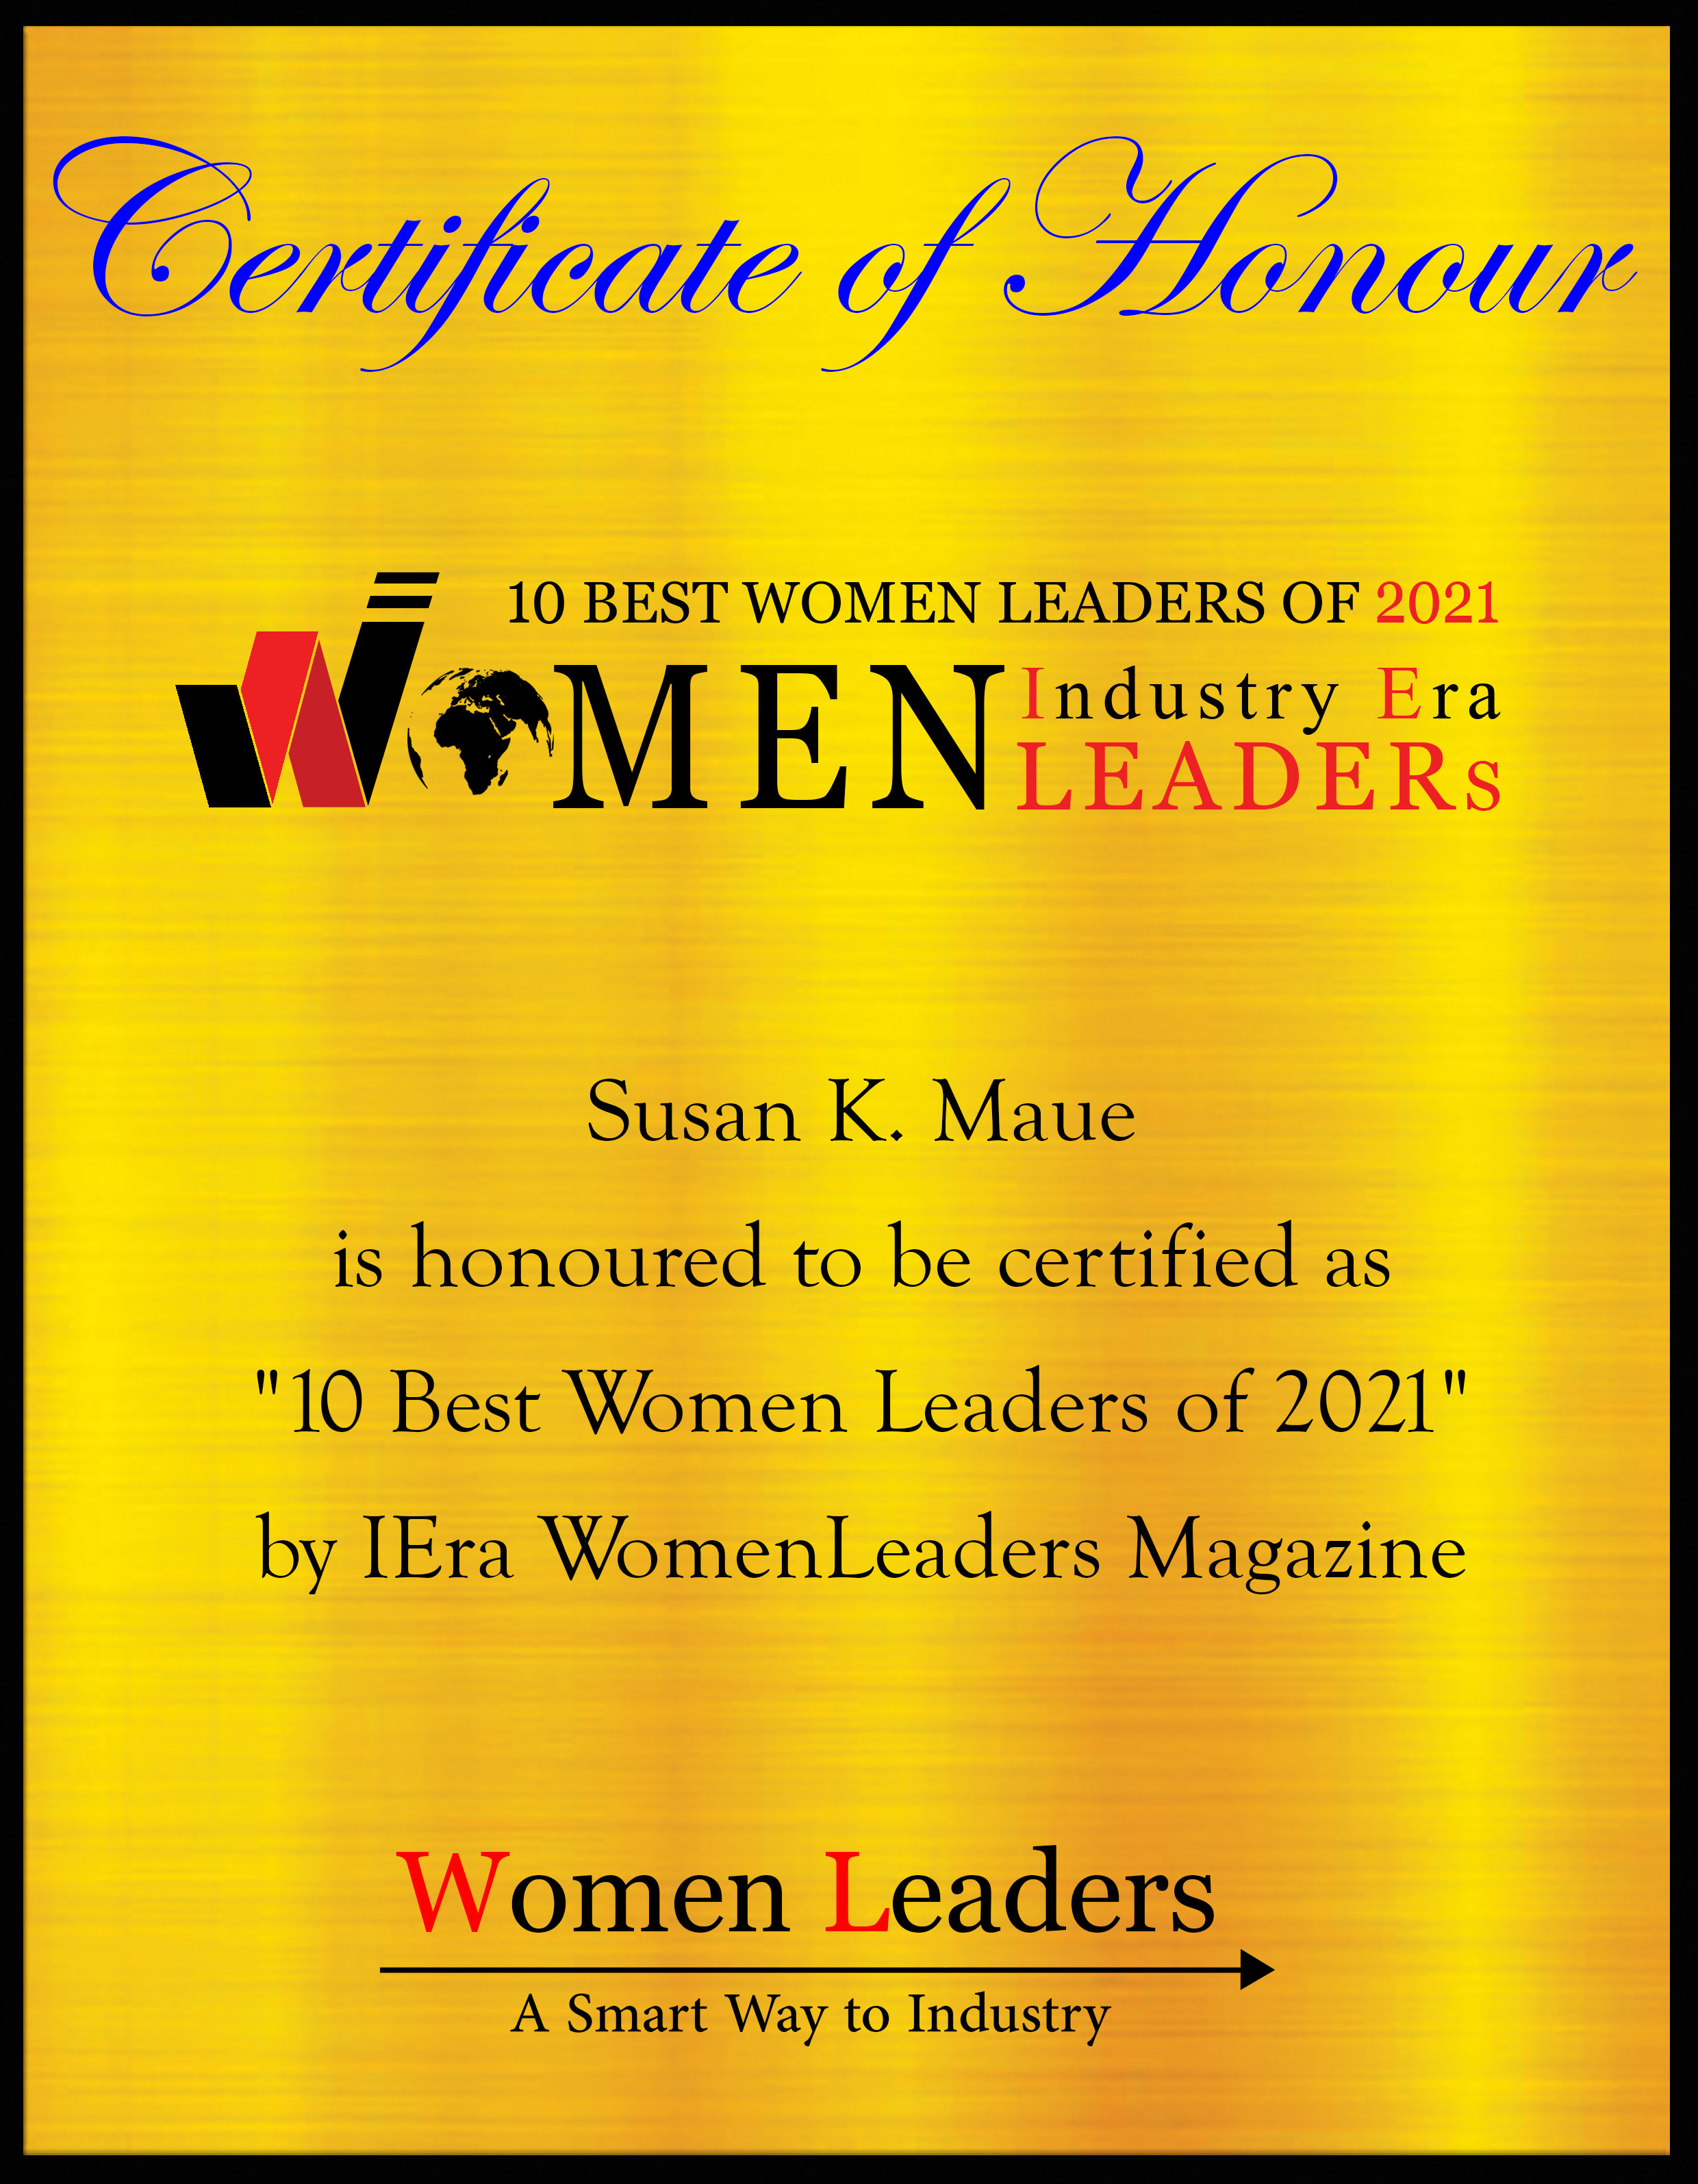 Susan K. Maue, Managing Director of PharmaLex, Best WomenLeaders of 2021